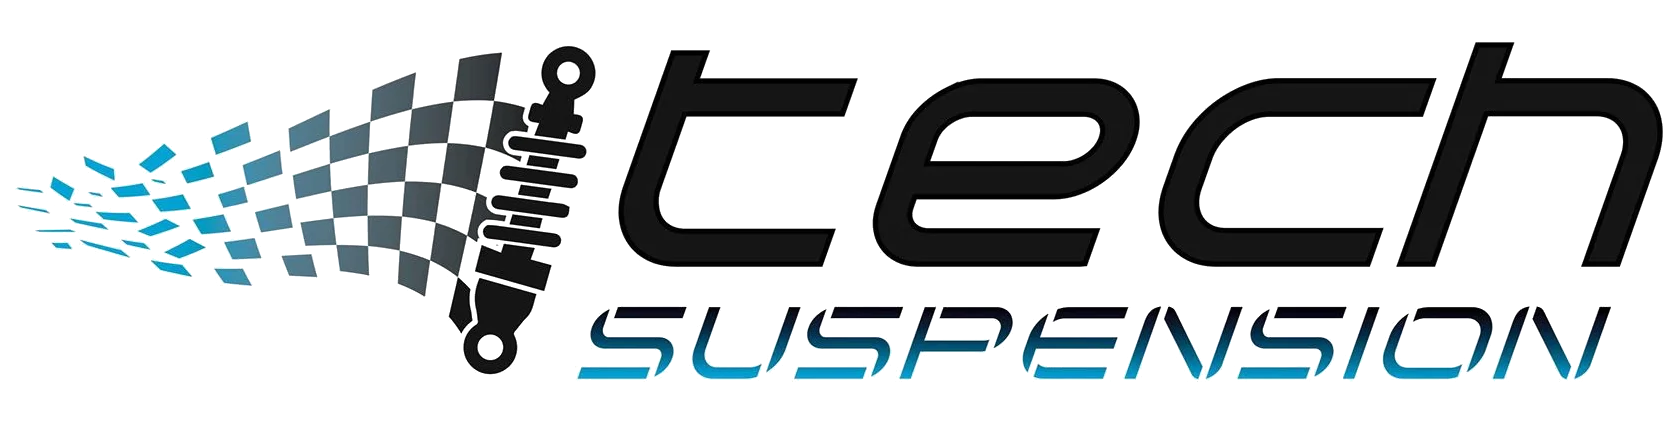 Logo techsuspension - sklep z amortyzatorami